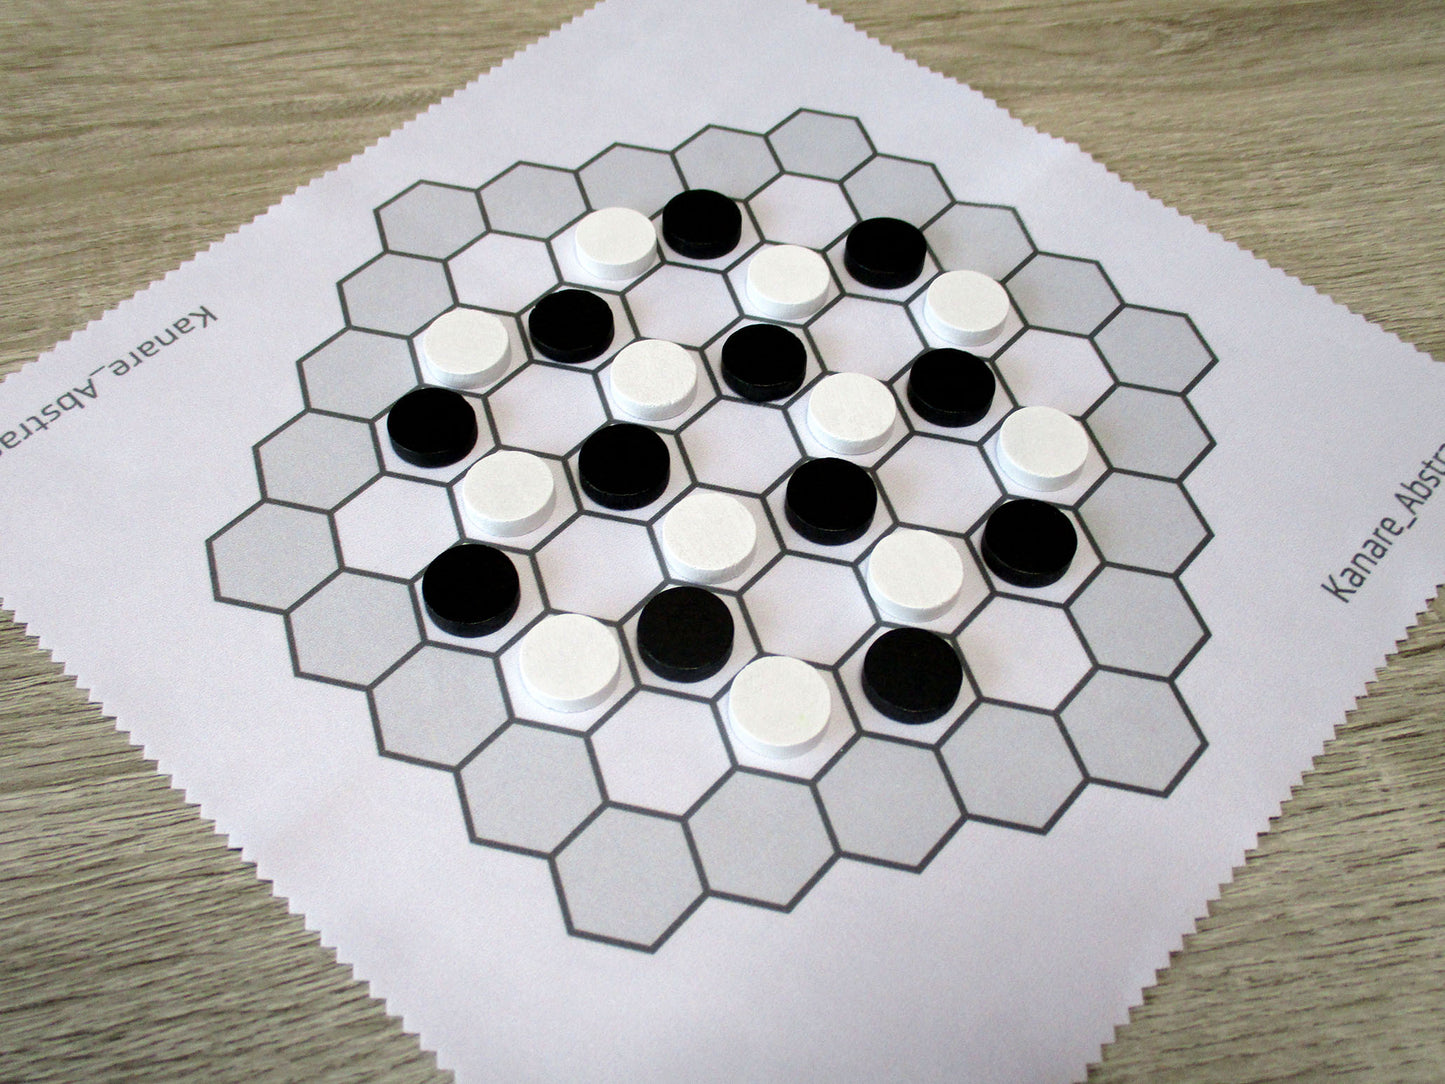 Generic Board "Hexagonal" Set